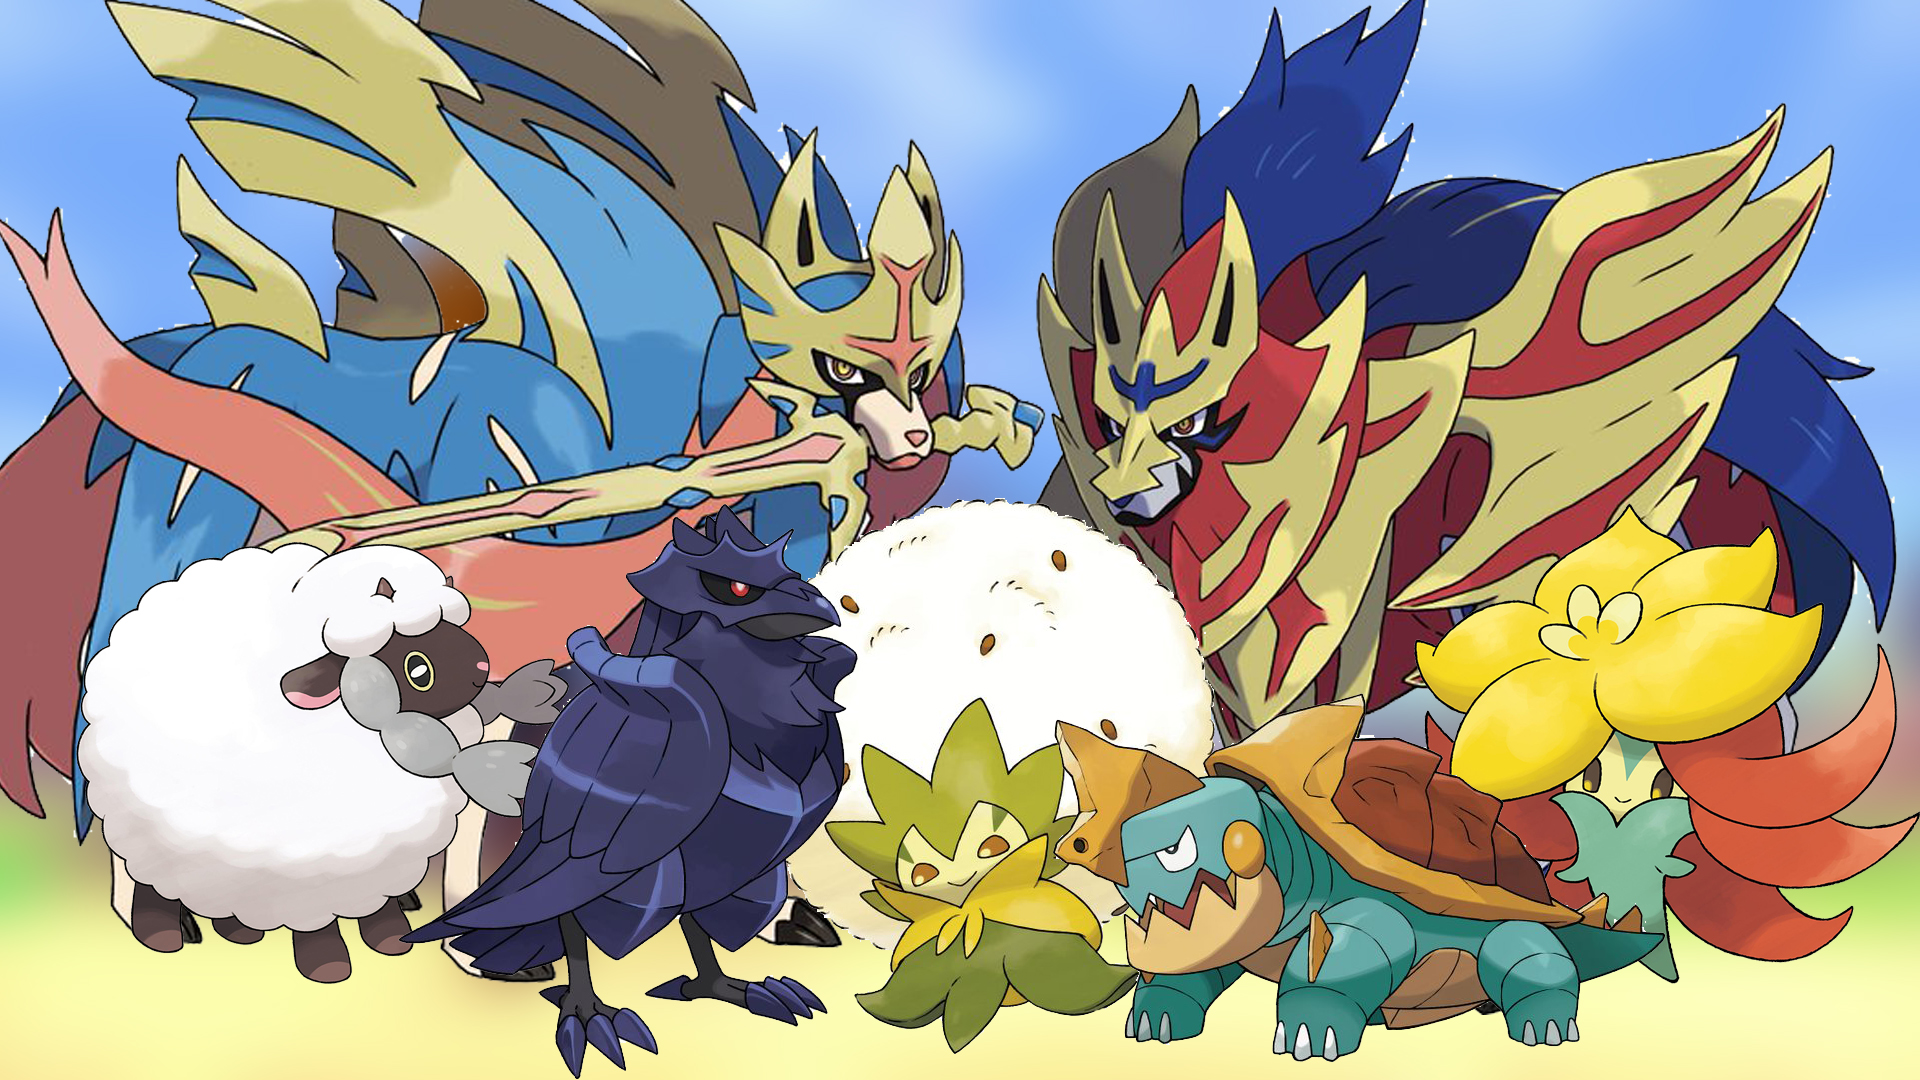 New Sword Shield Pokémon Revealed Including Box